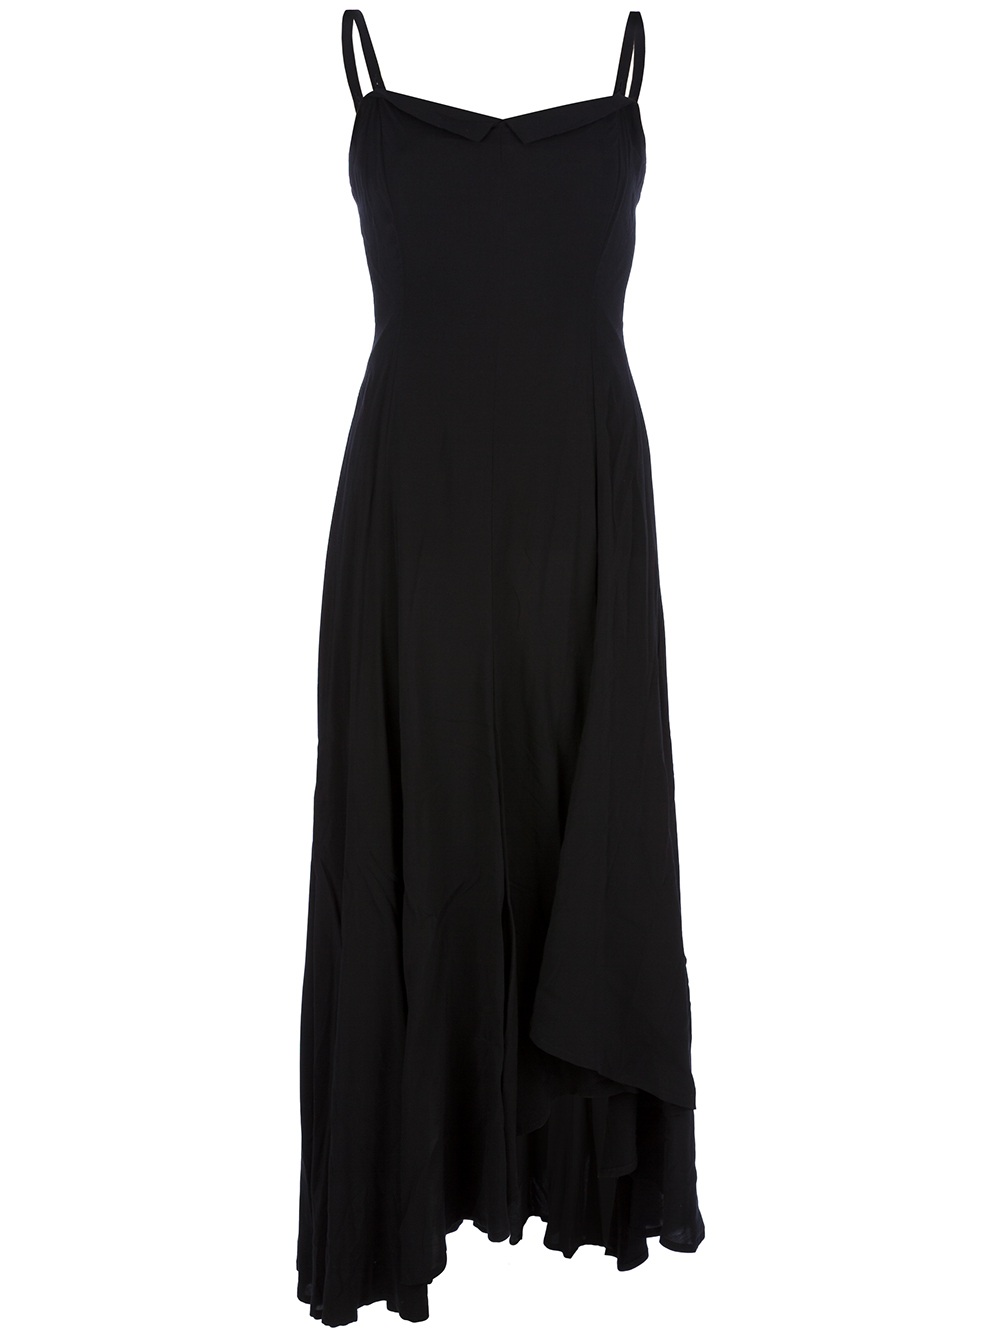 Lyst - Yohji Yamamoto Strappy Dress in Black